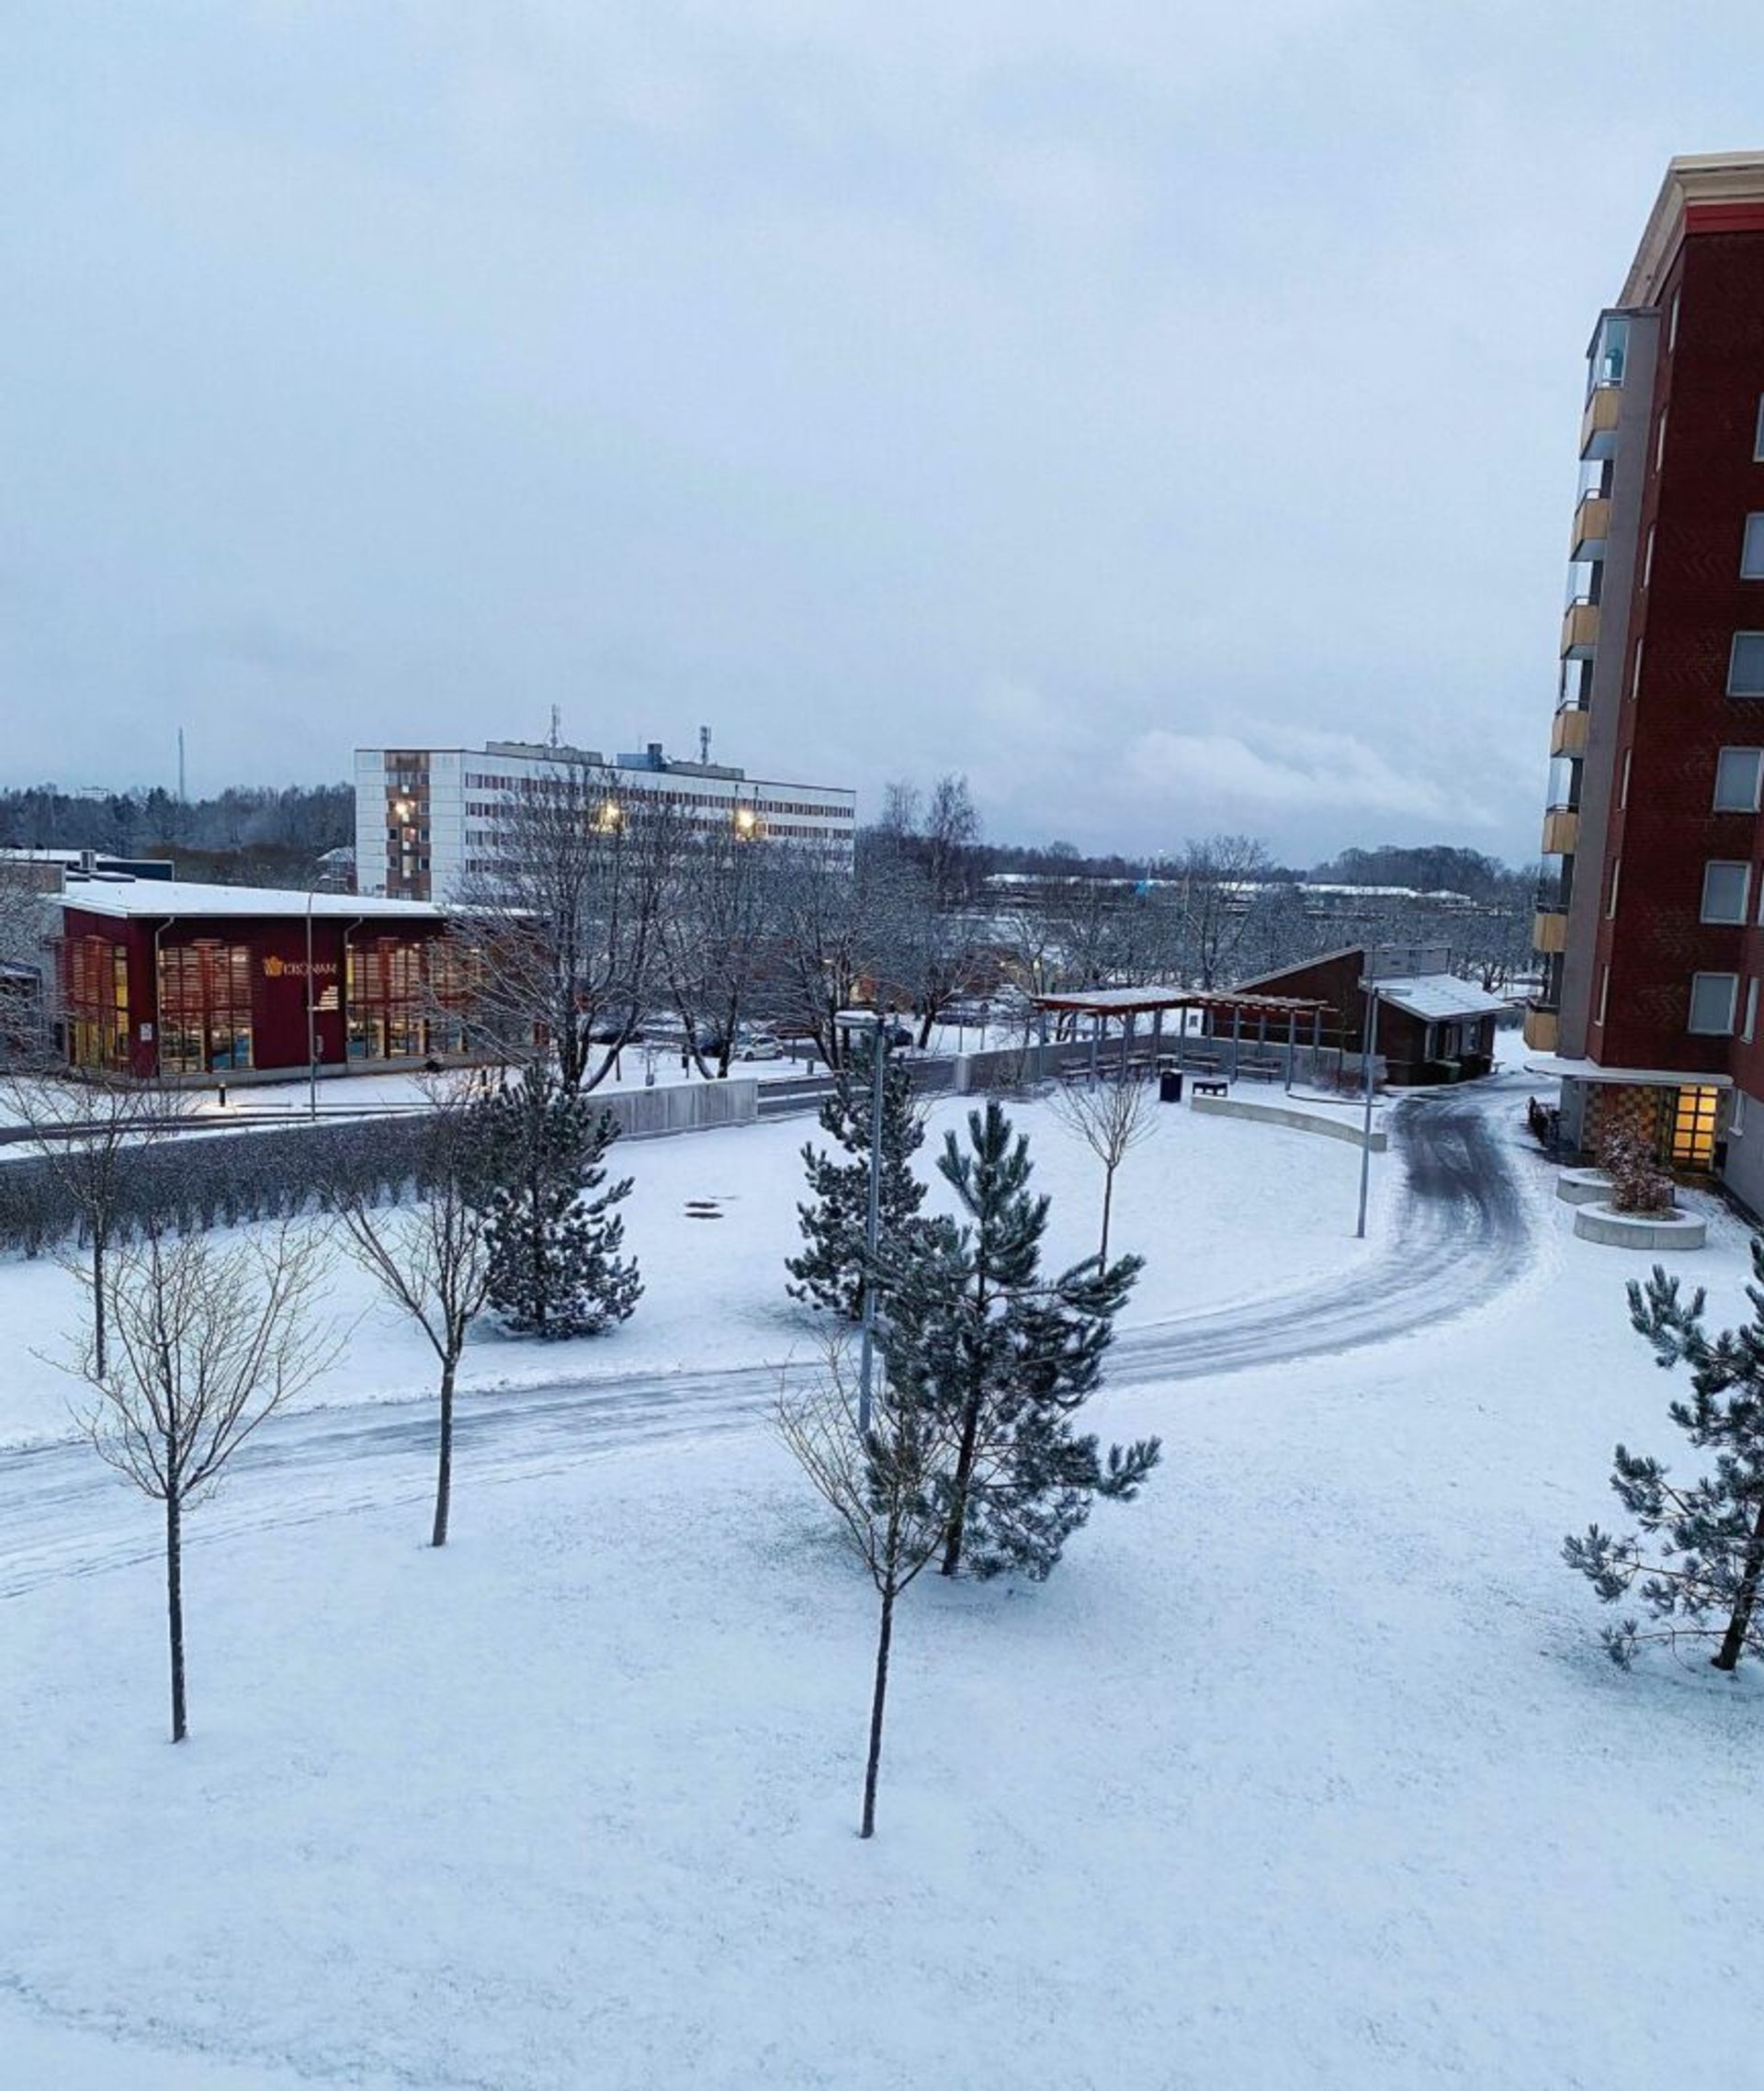 Buildings, trees, and snow in Trollhätan